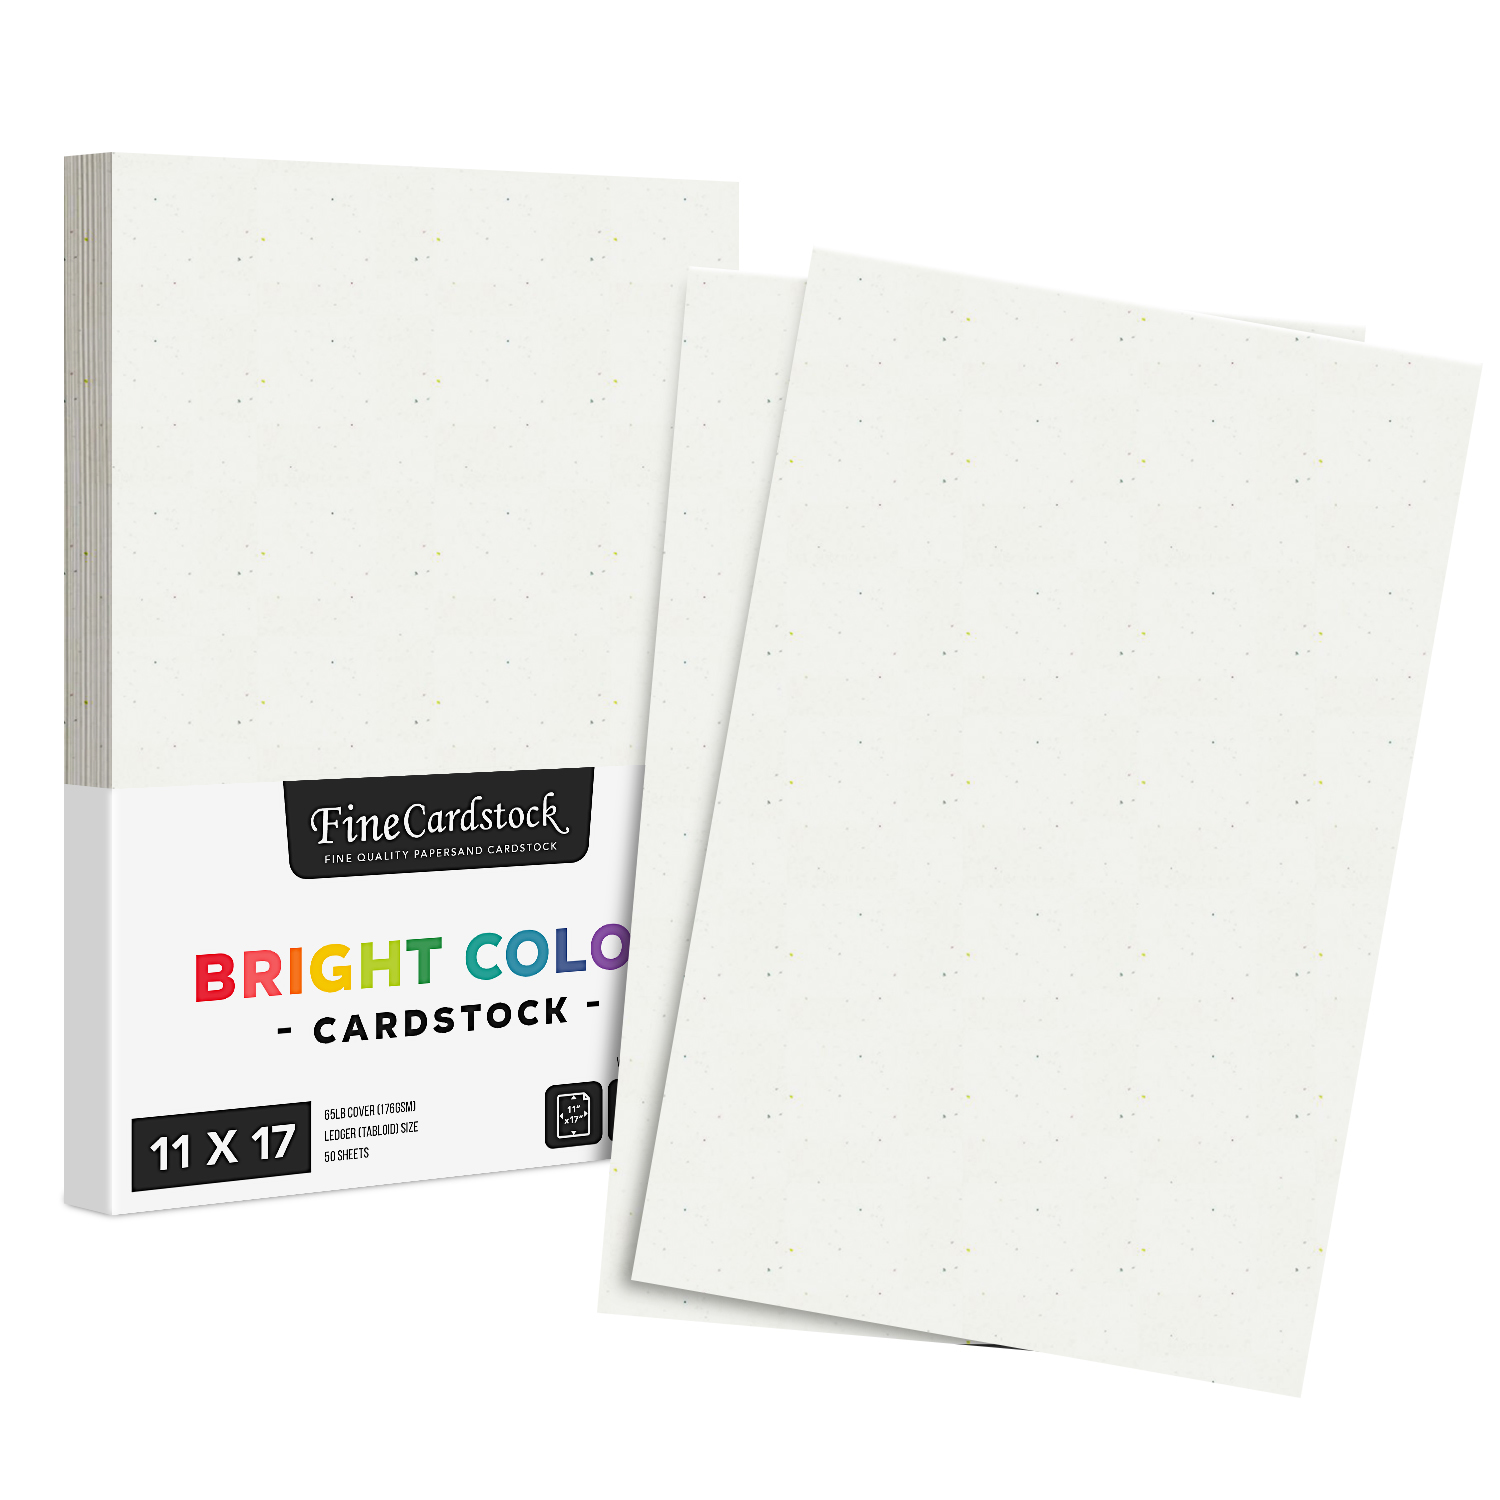 11 x 17 Color Paper Plasma Pink - Bulk and Wholesale - Fine Cardstock